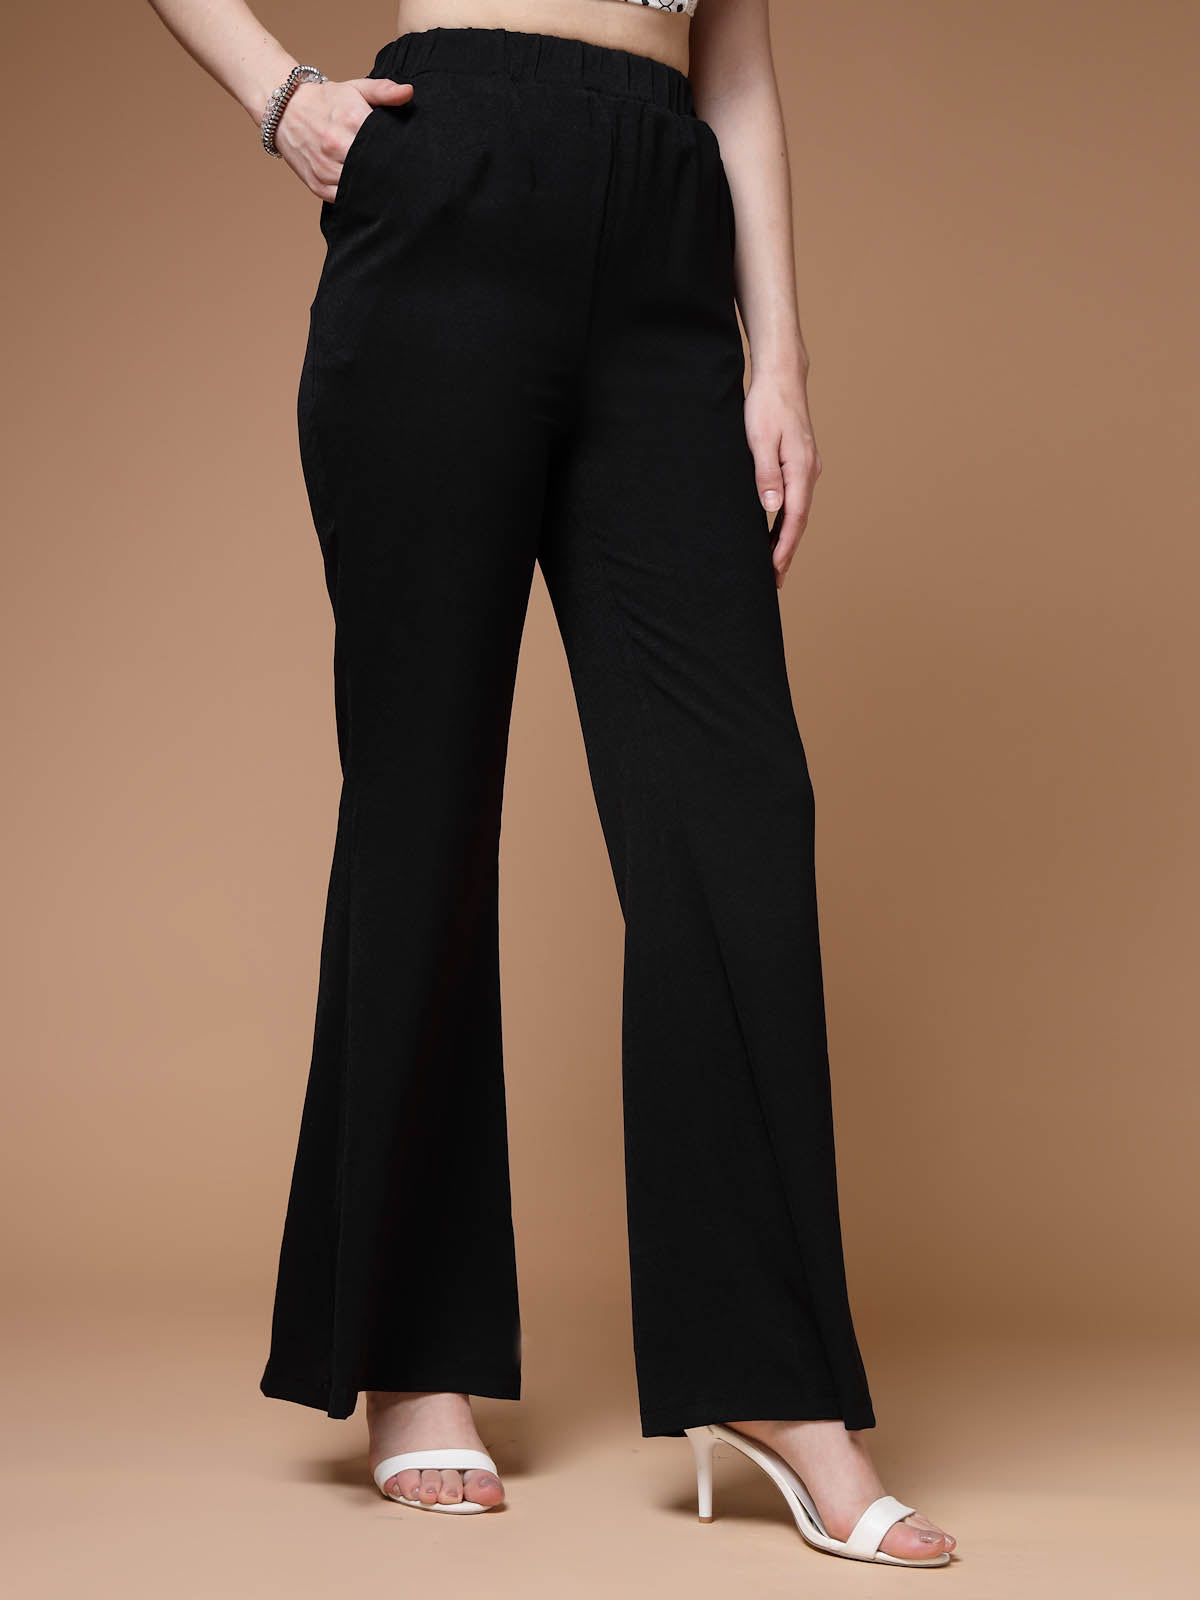 Black Slim Fit Comfortable Stretchable Plain Cotton Formal Pants For Womens  at Best Price in Noida | Madhuram Enterprises